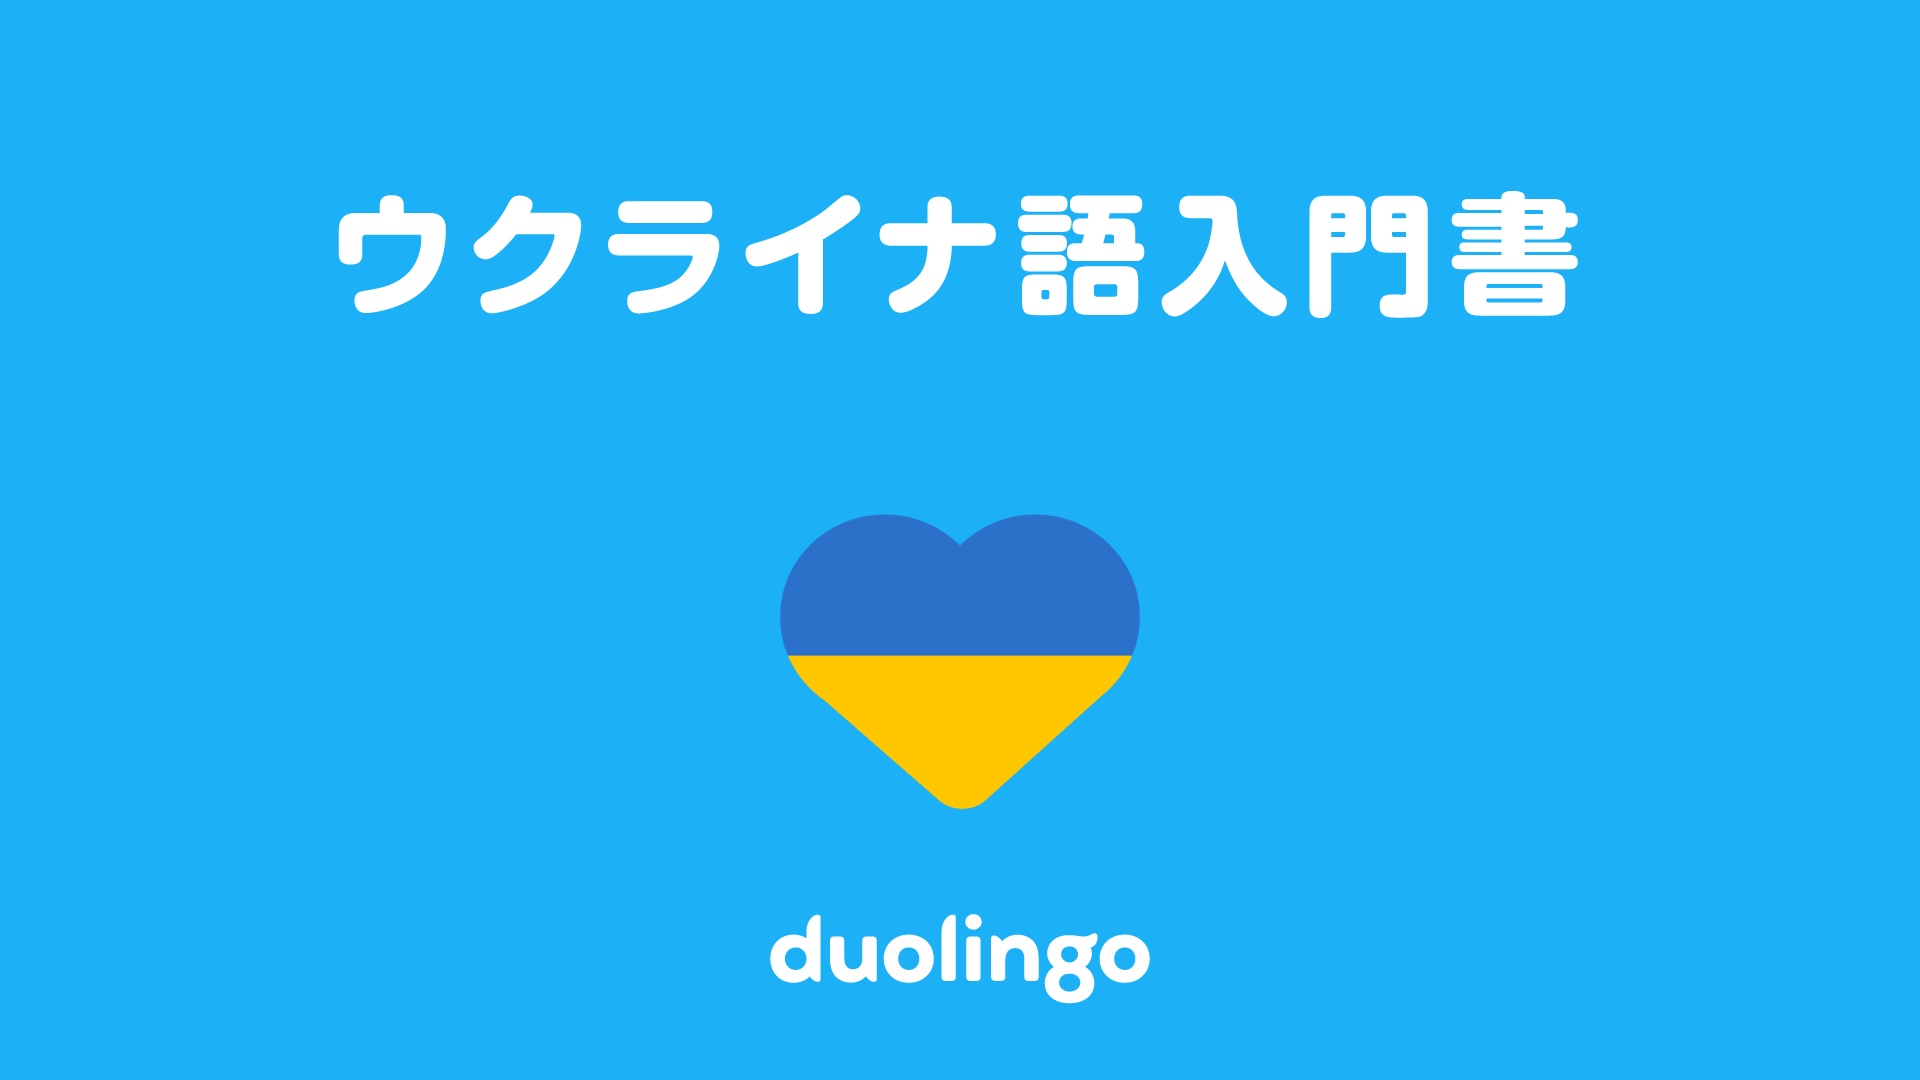 Duolingo ウクライナ語入門書 日本語版 を緊急公開 Duolingo Inc のプレスリリース